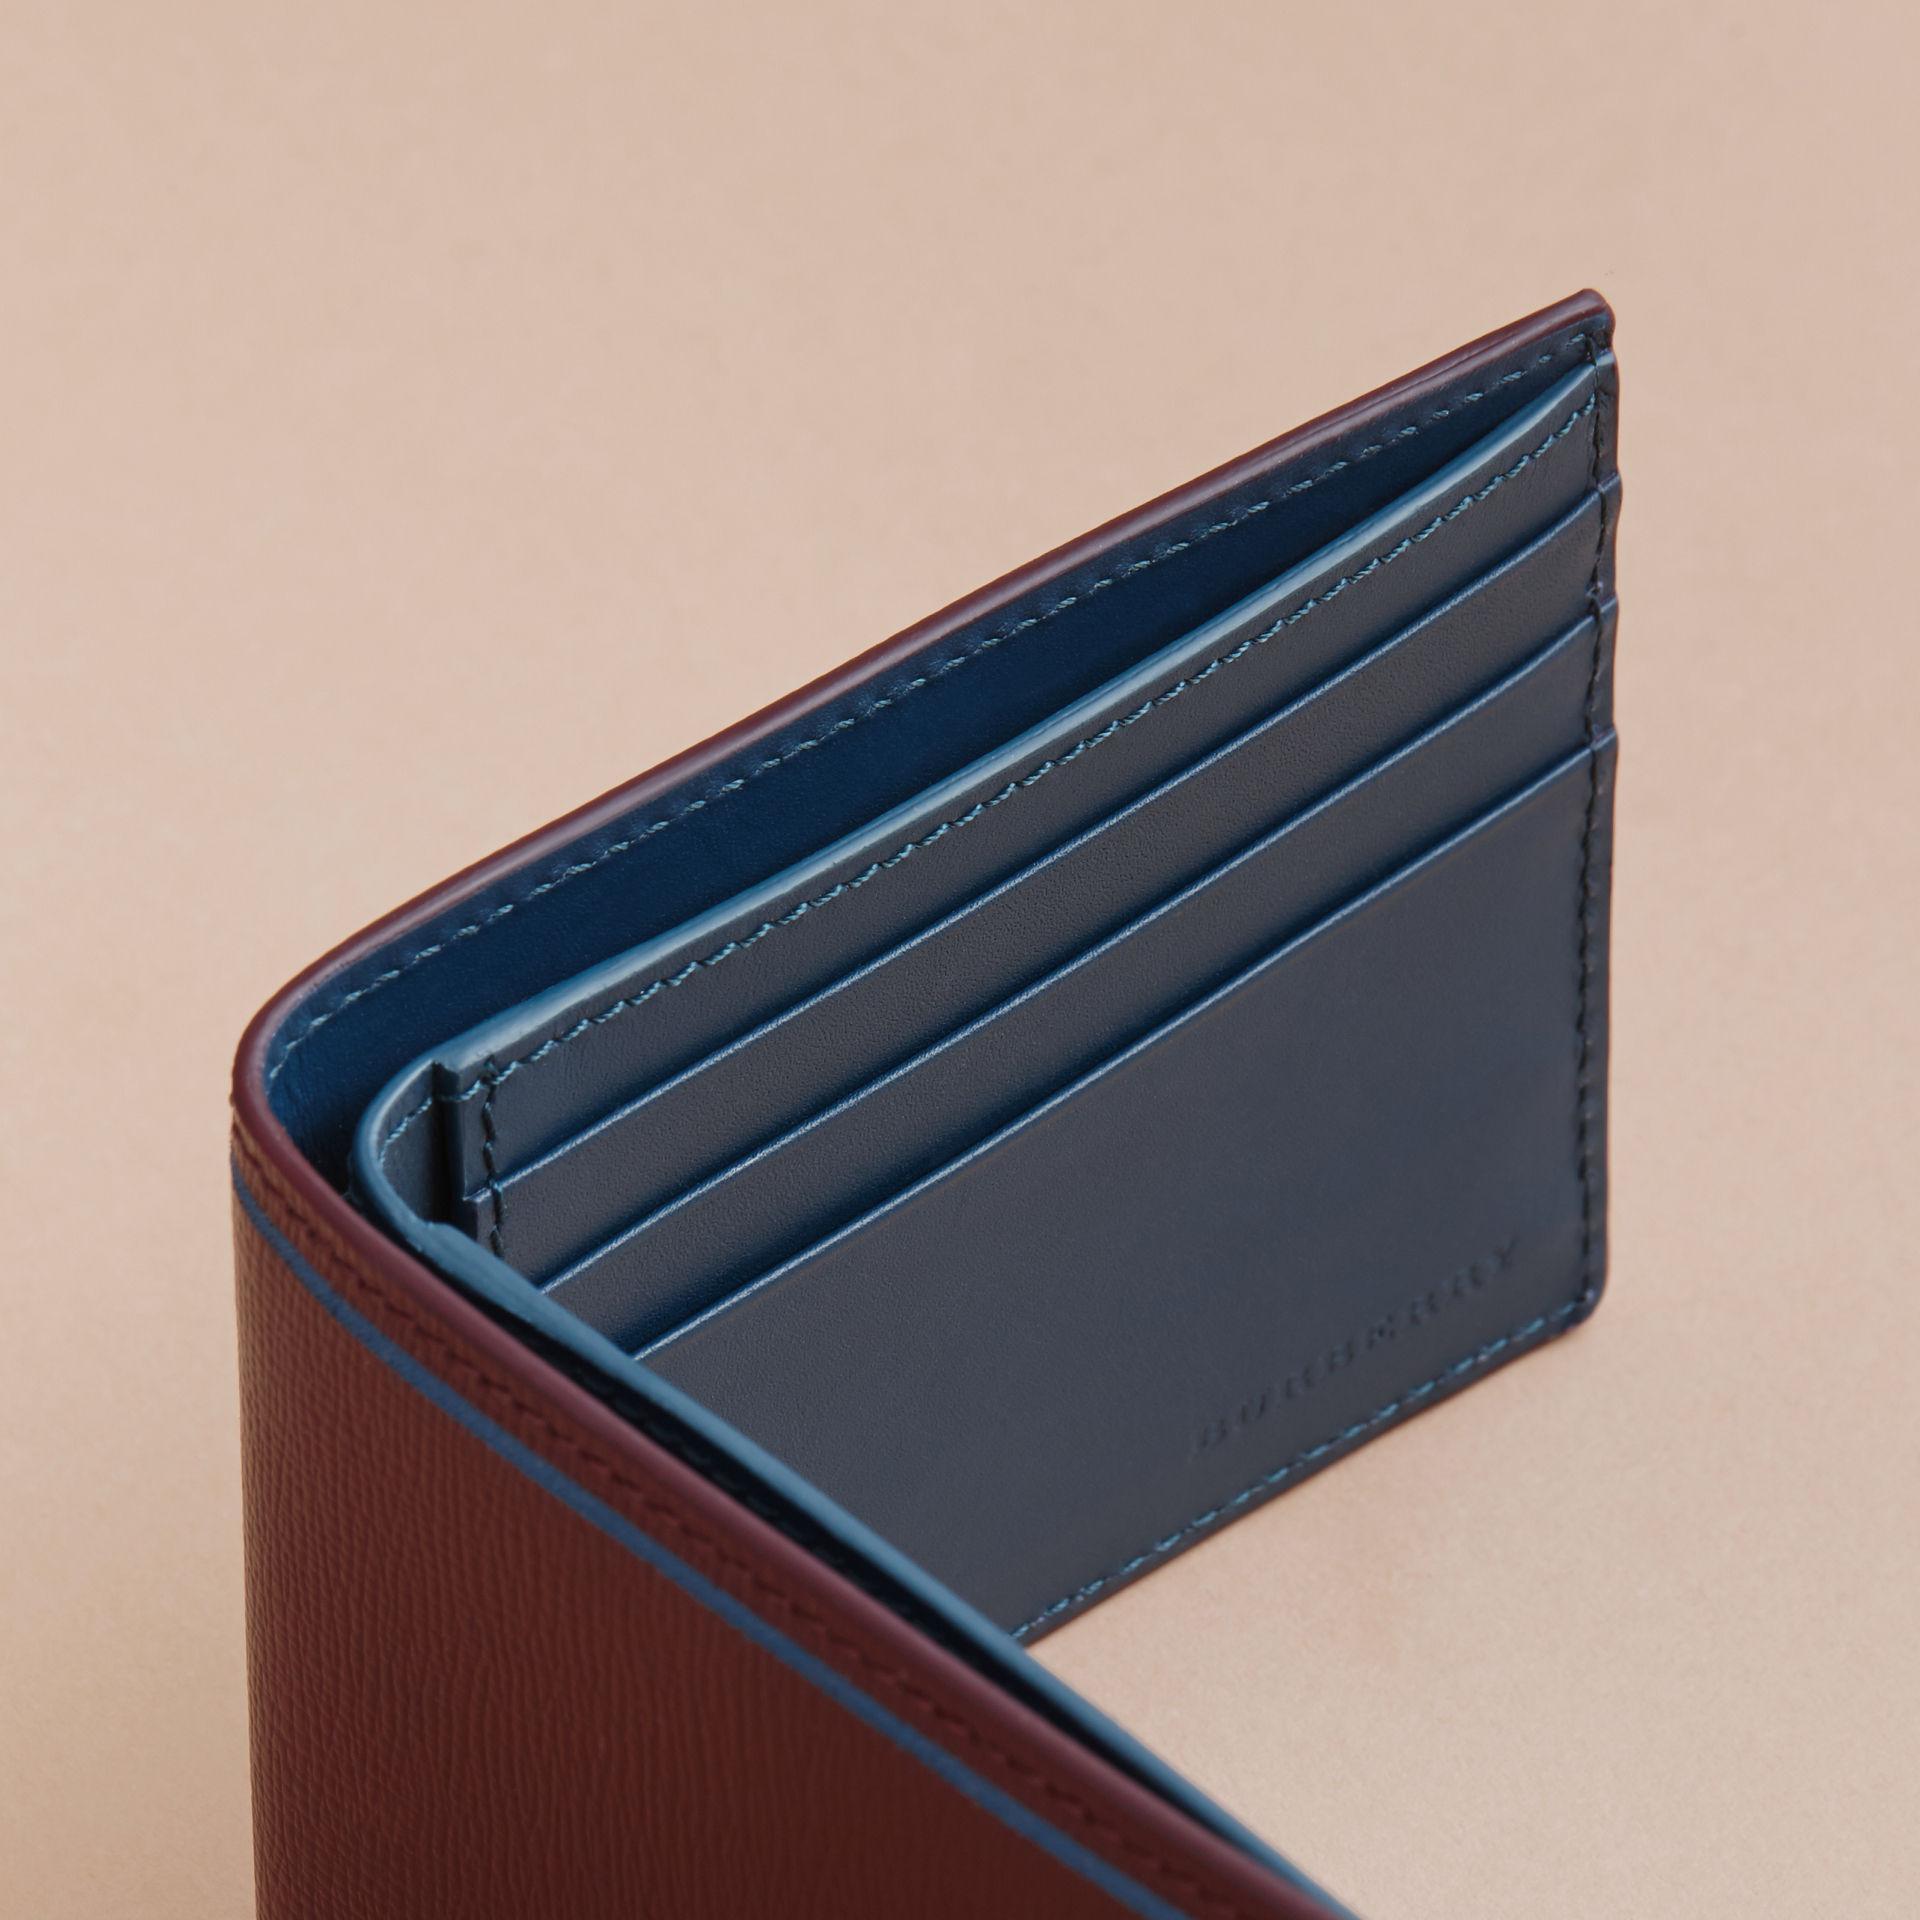 Maroon Leather Bifold Wallet